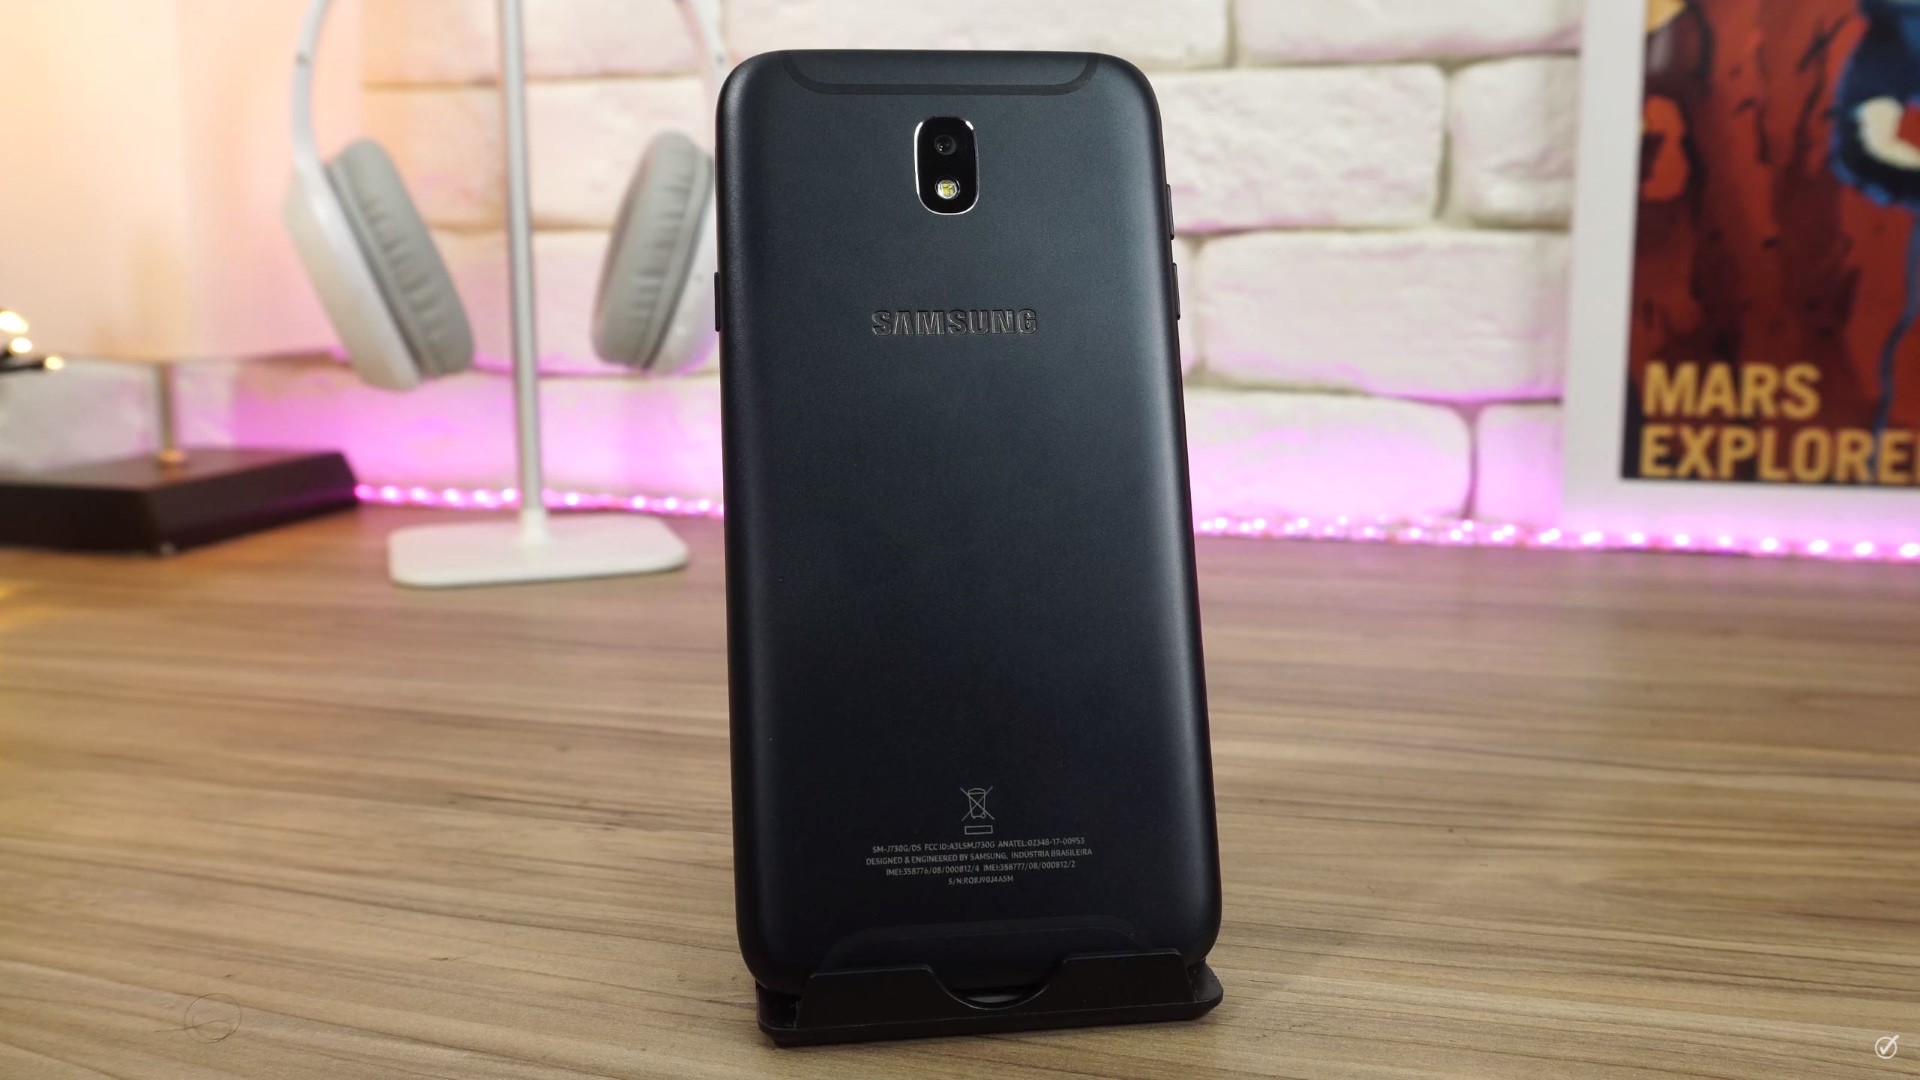 Samsung Galaxy J7 Pro vale a pena? [Análise / Review] - EscolhaSegura